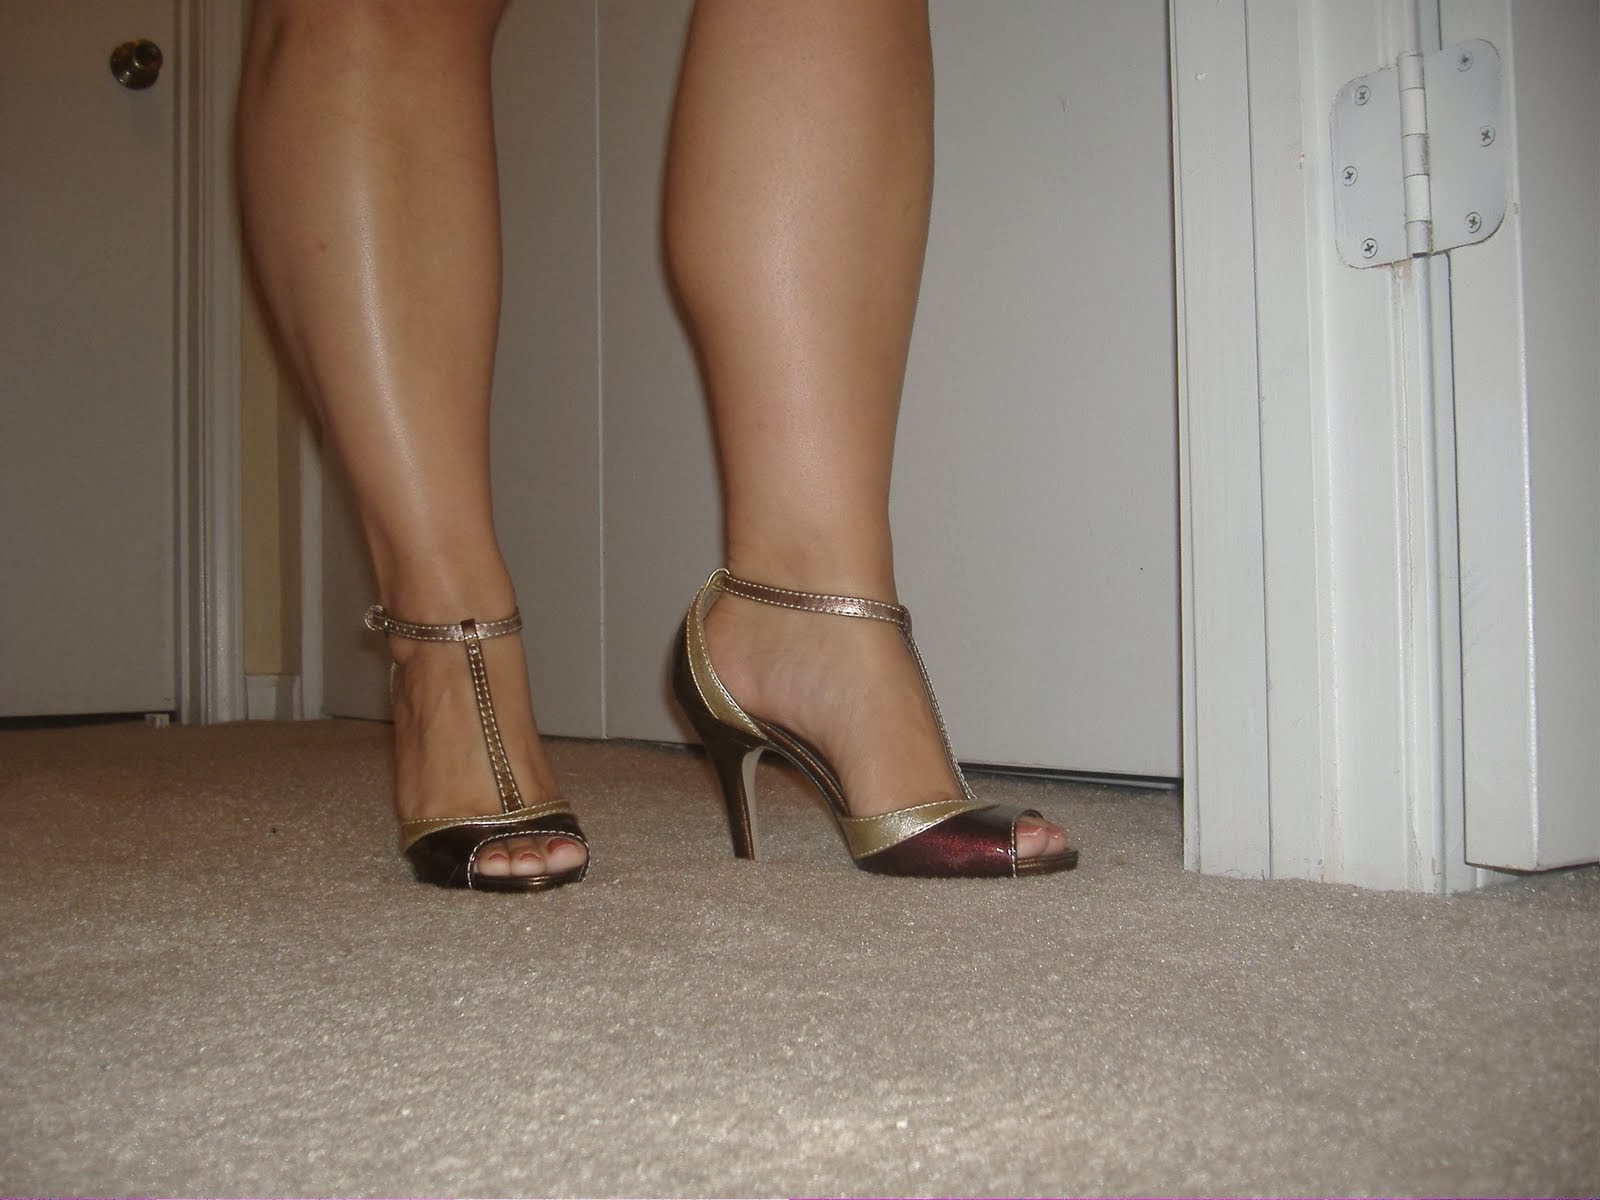 Flat shoes stockings